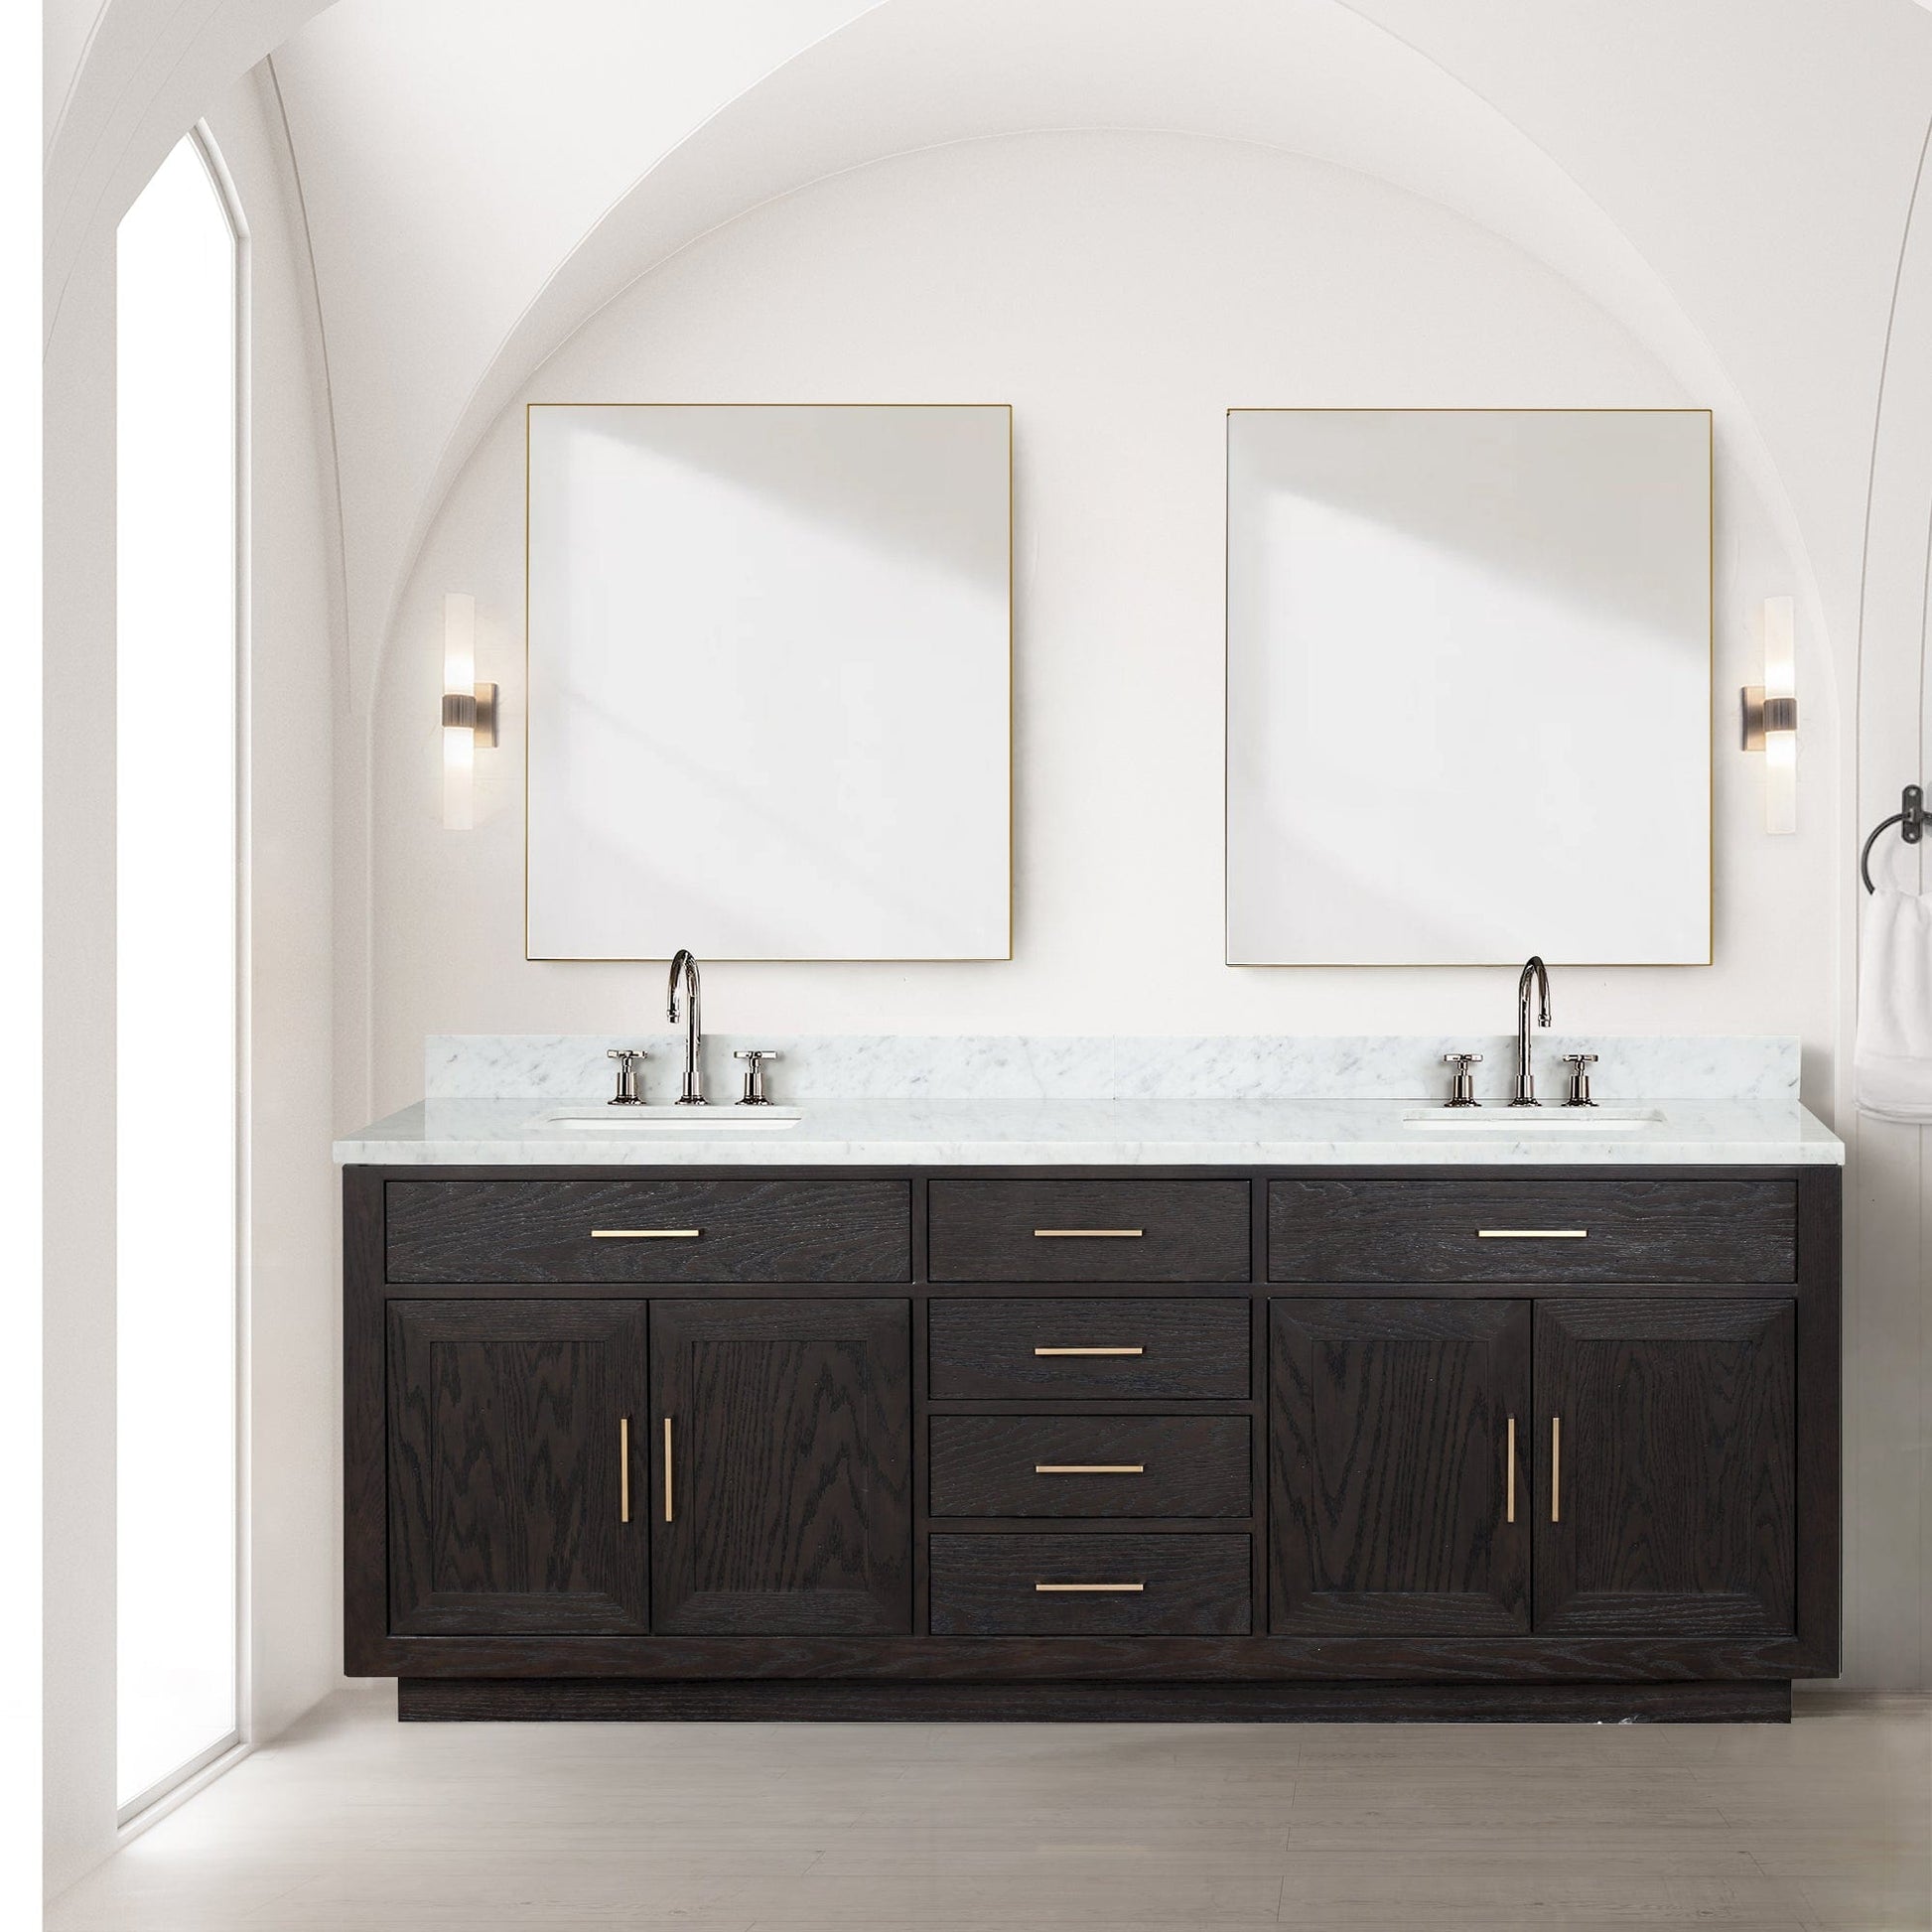 Lexora Bathroom Vanity Abbey 84inch x 22inch Double Bath Vanity - Black Oak